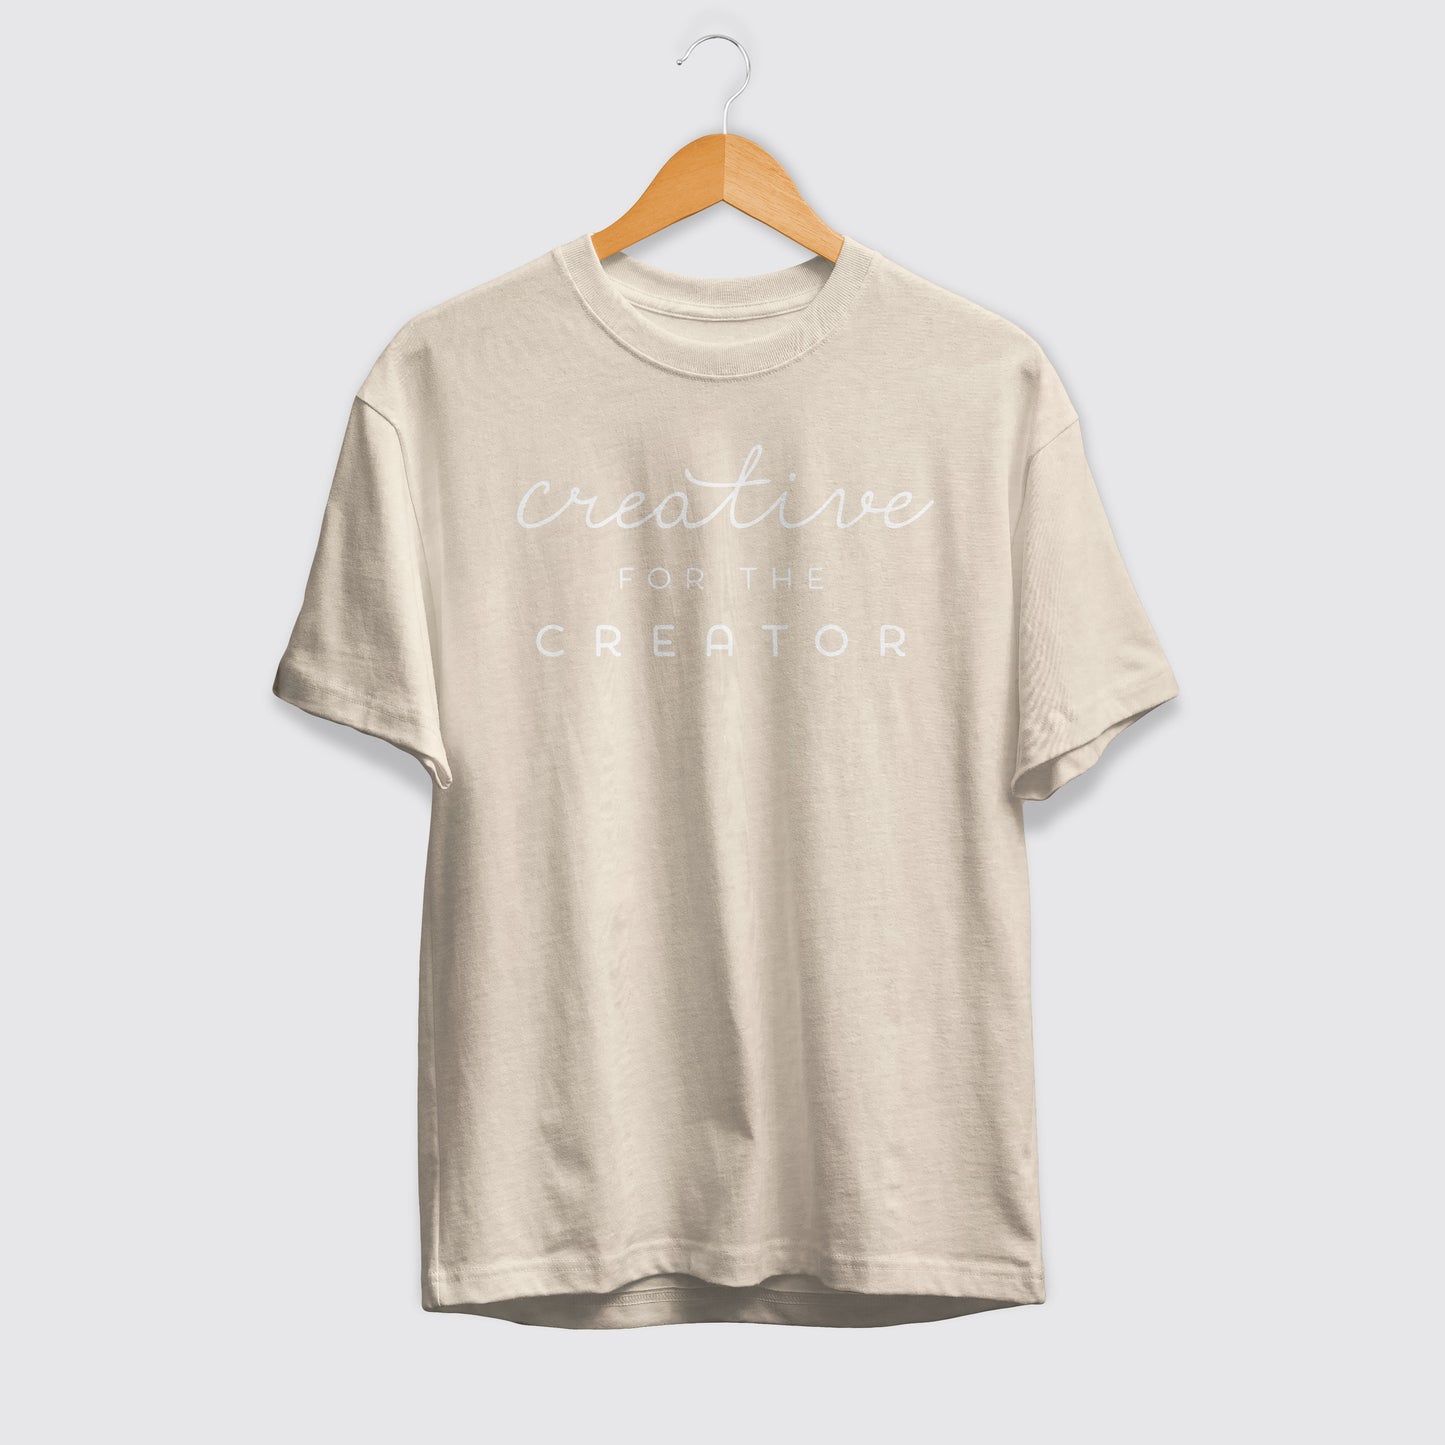 creative for the Creator T-Shirt